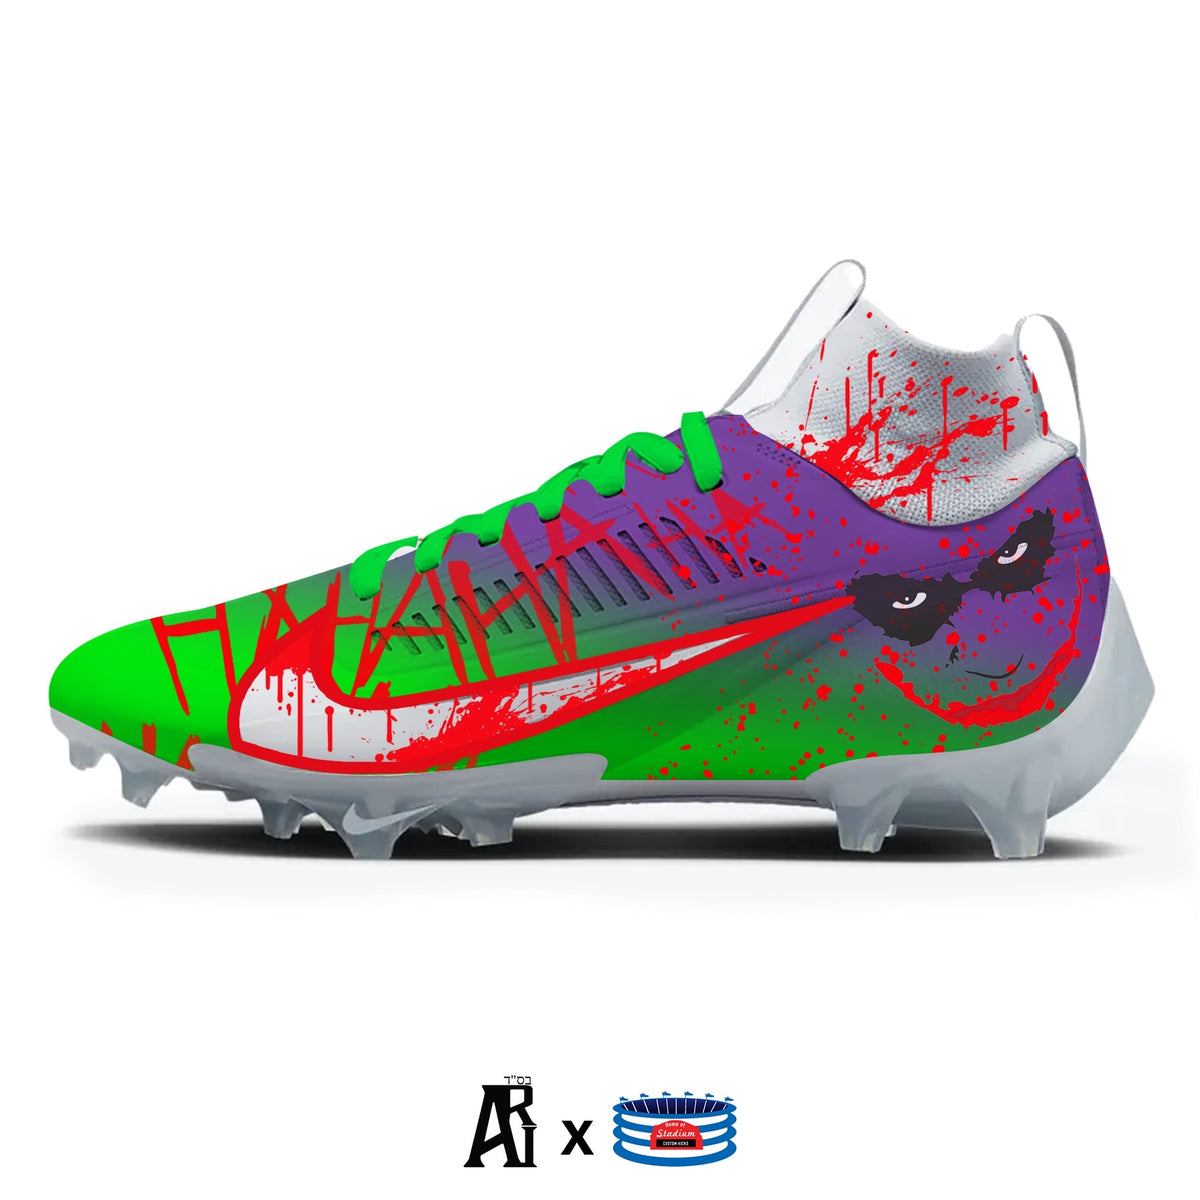 Custom Nike Vapor Joker Football Cleats 10.5